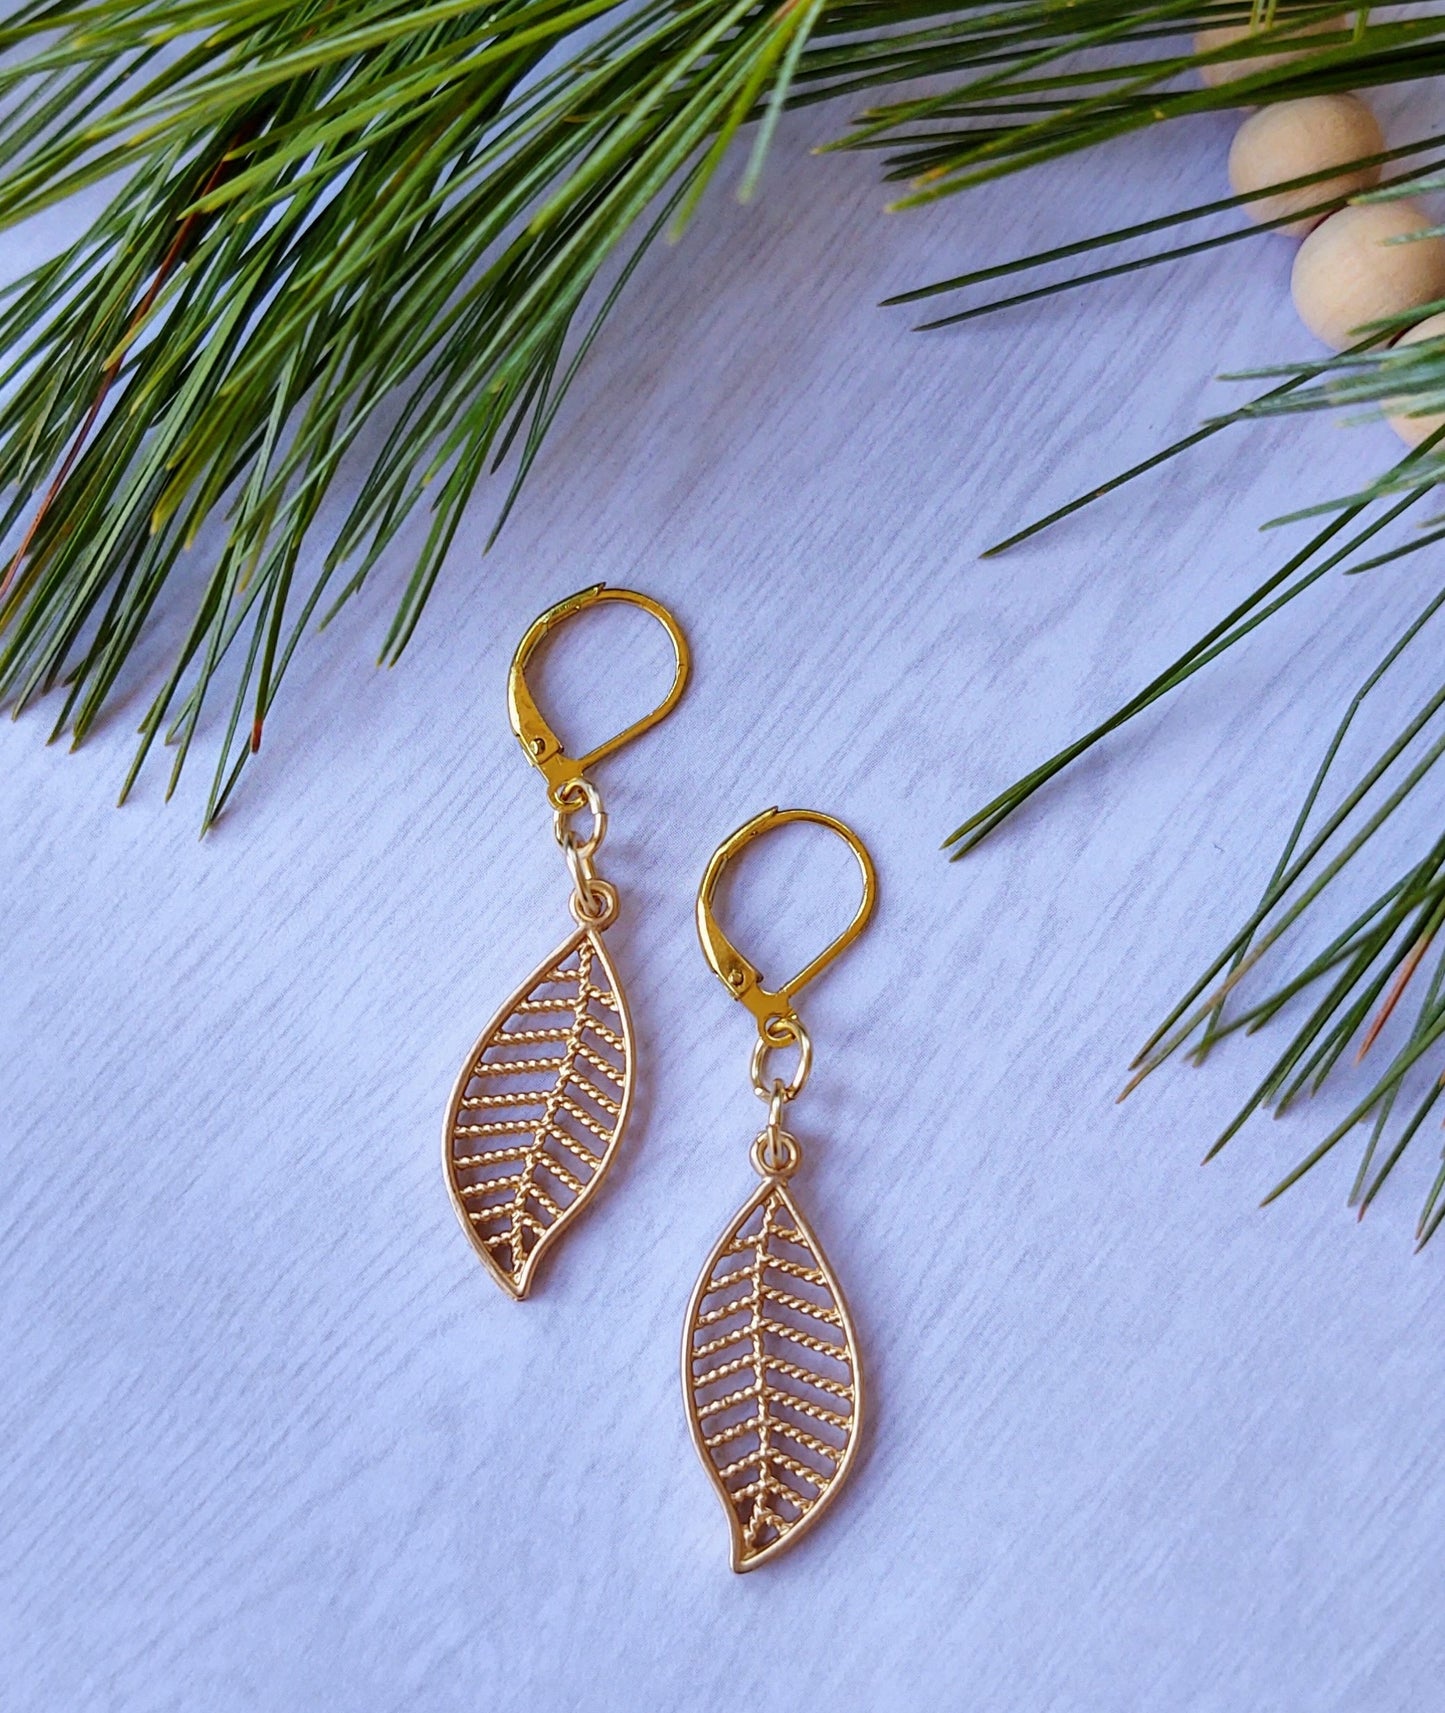 Gold Leaf earrings